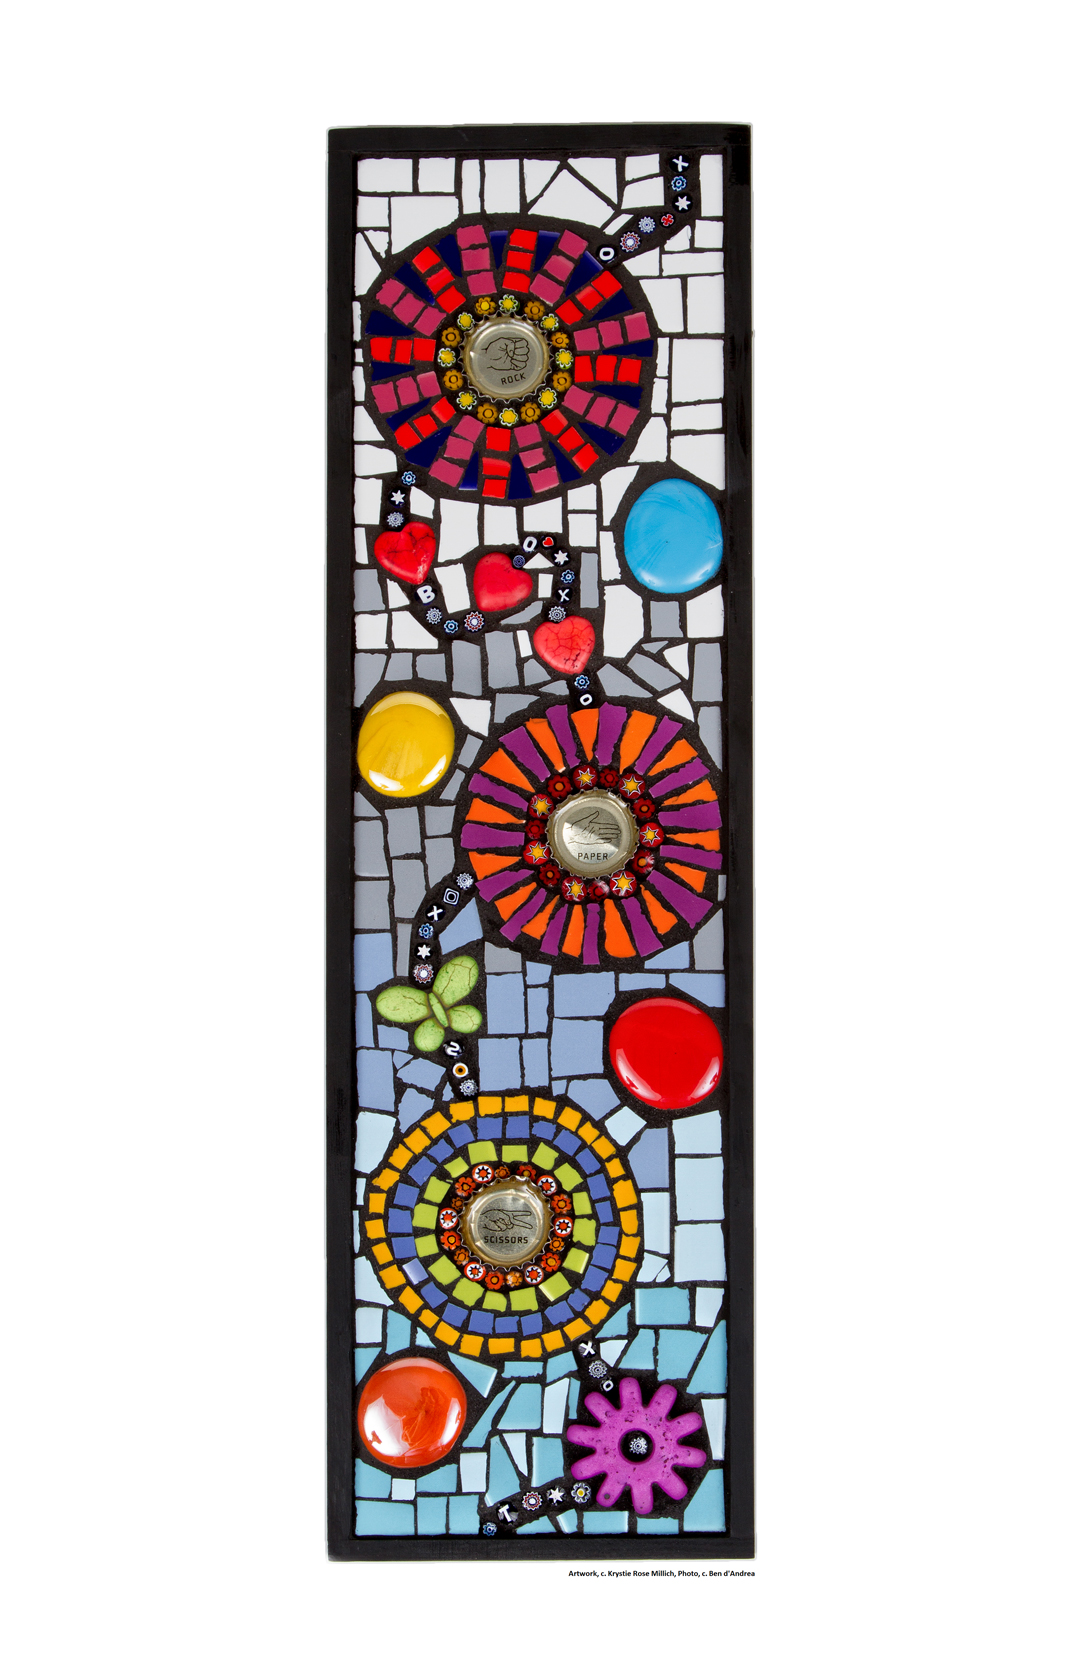 krystie rose millich tile mosaic artist in denver colorado rock paper scissors